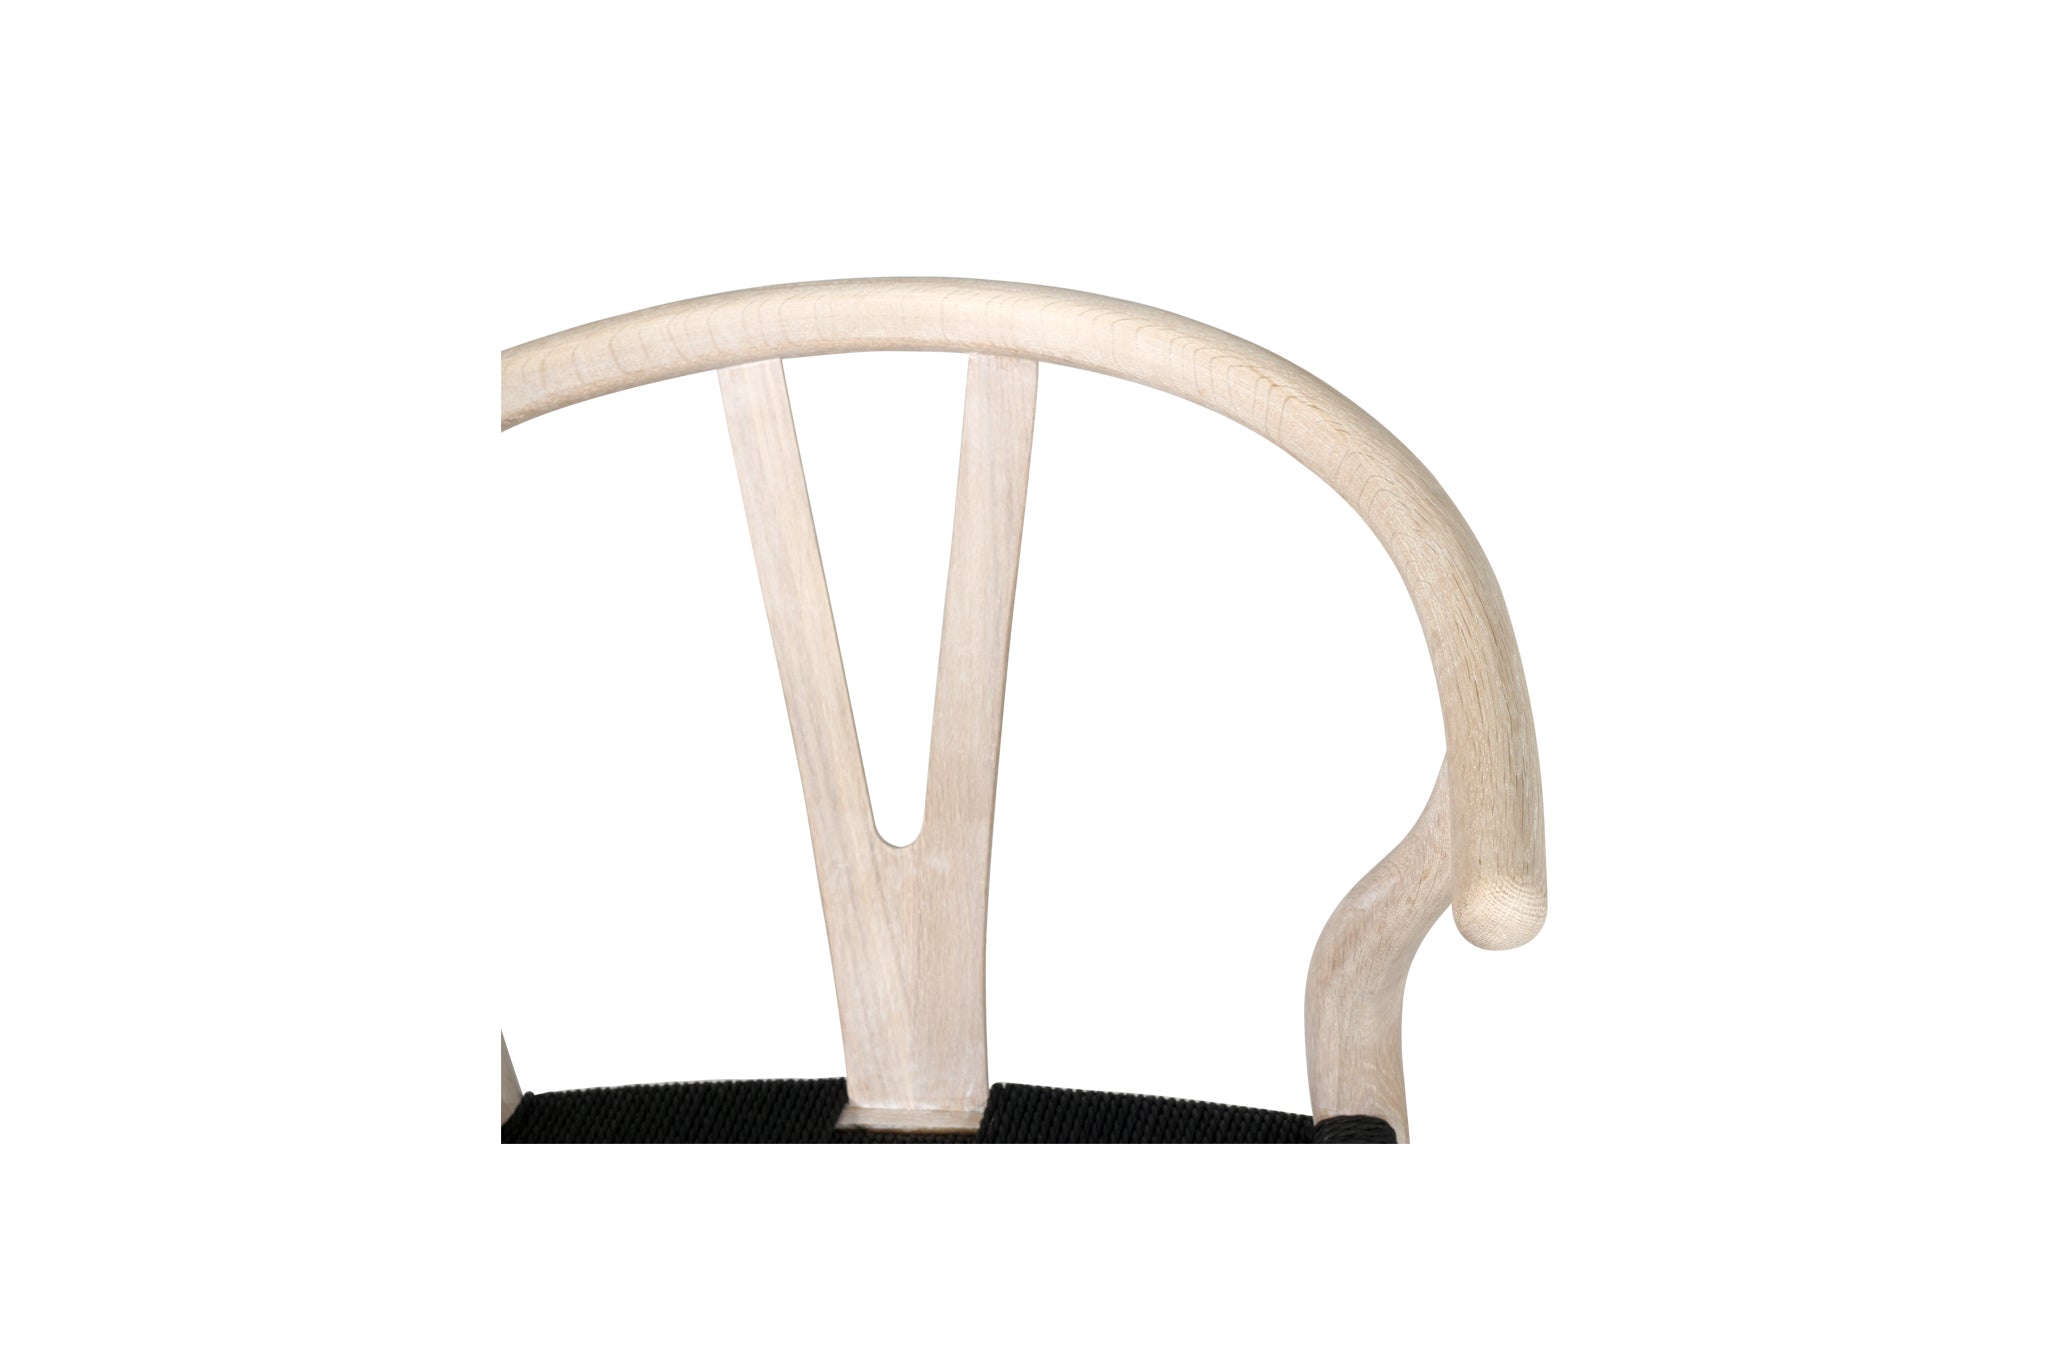 Hans Wegner Wishbone Replica Dining Chair – White Coastal Oak with Charcoal Cord